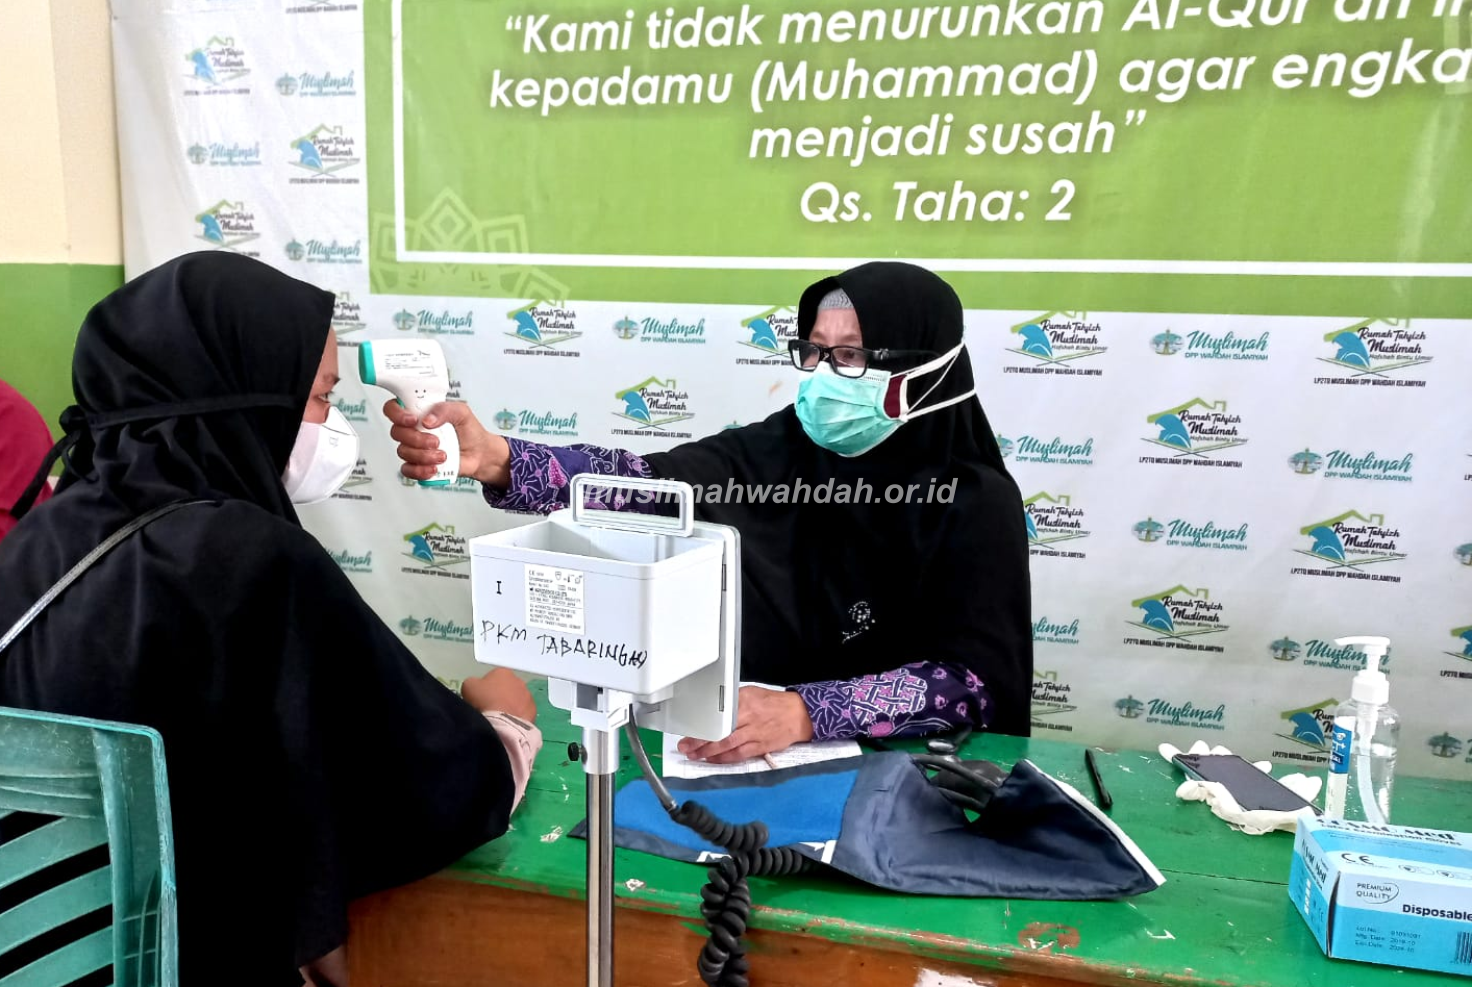 Gandeng Dinas Kesehatan Provinsi Sulsel, Muslimah Wahdah Gelar Vaksinasi untuk Kader